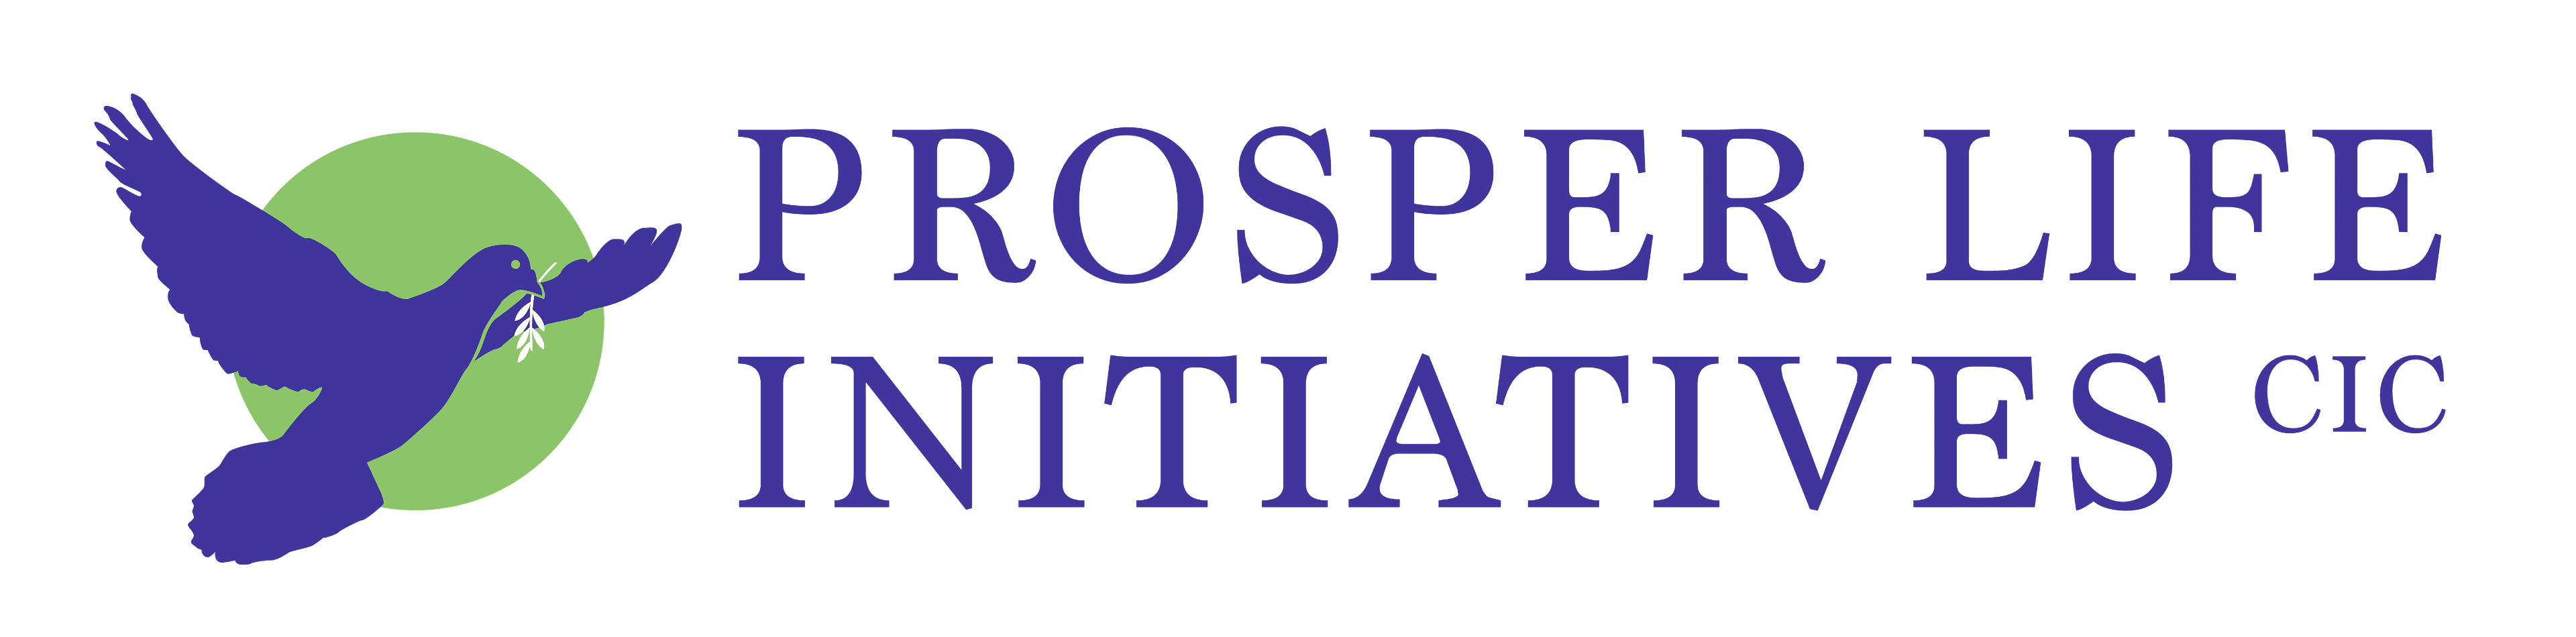 Prosper Life Initiatives logo